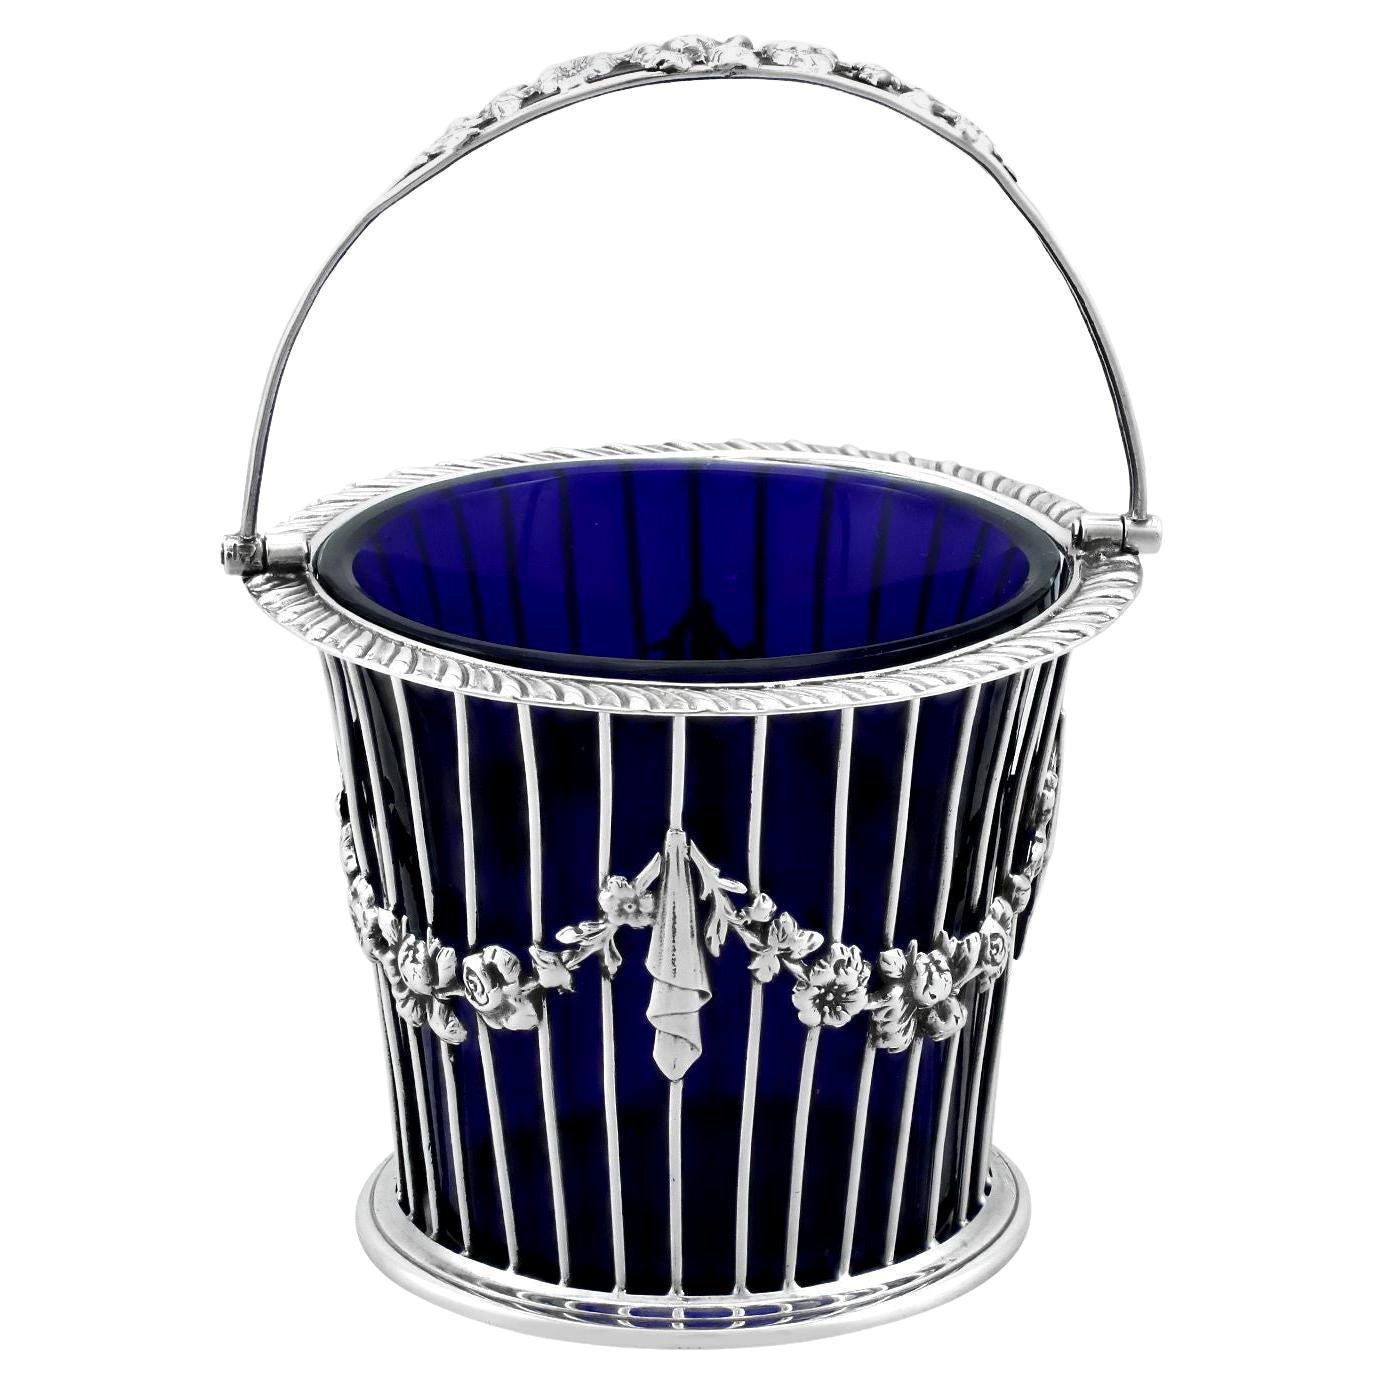  Antique Alfred Marston Sterling Silver Sugar Basket For Sale